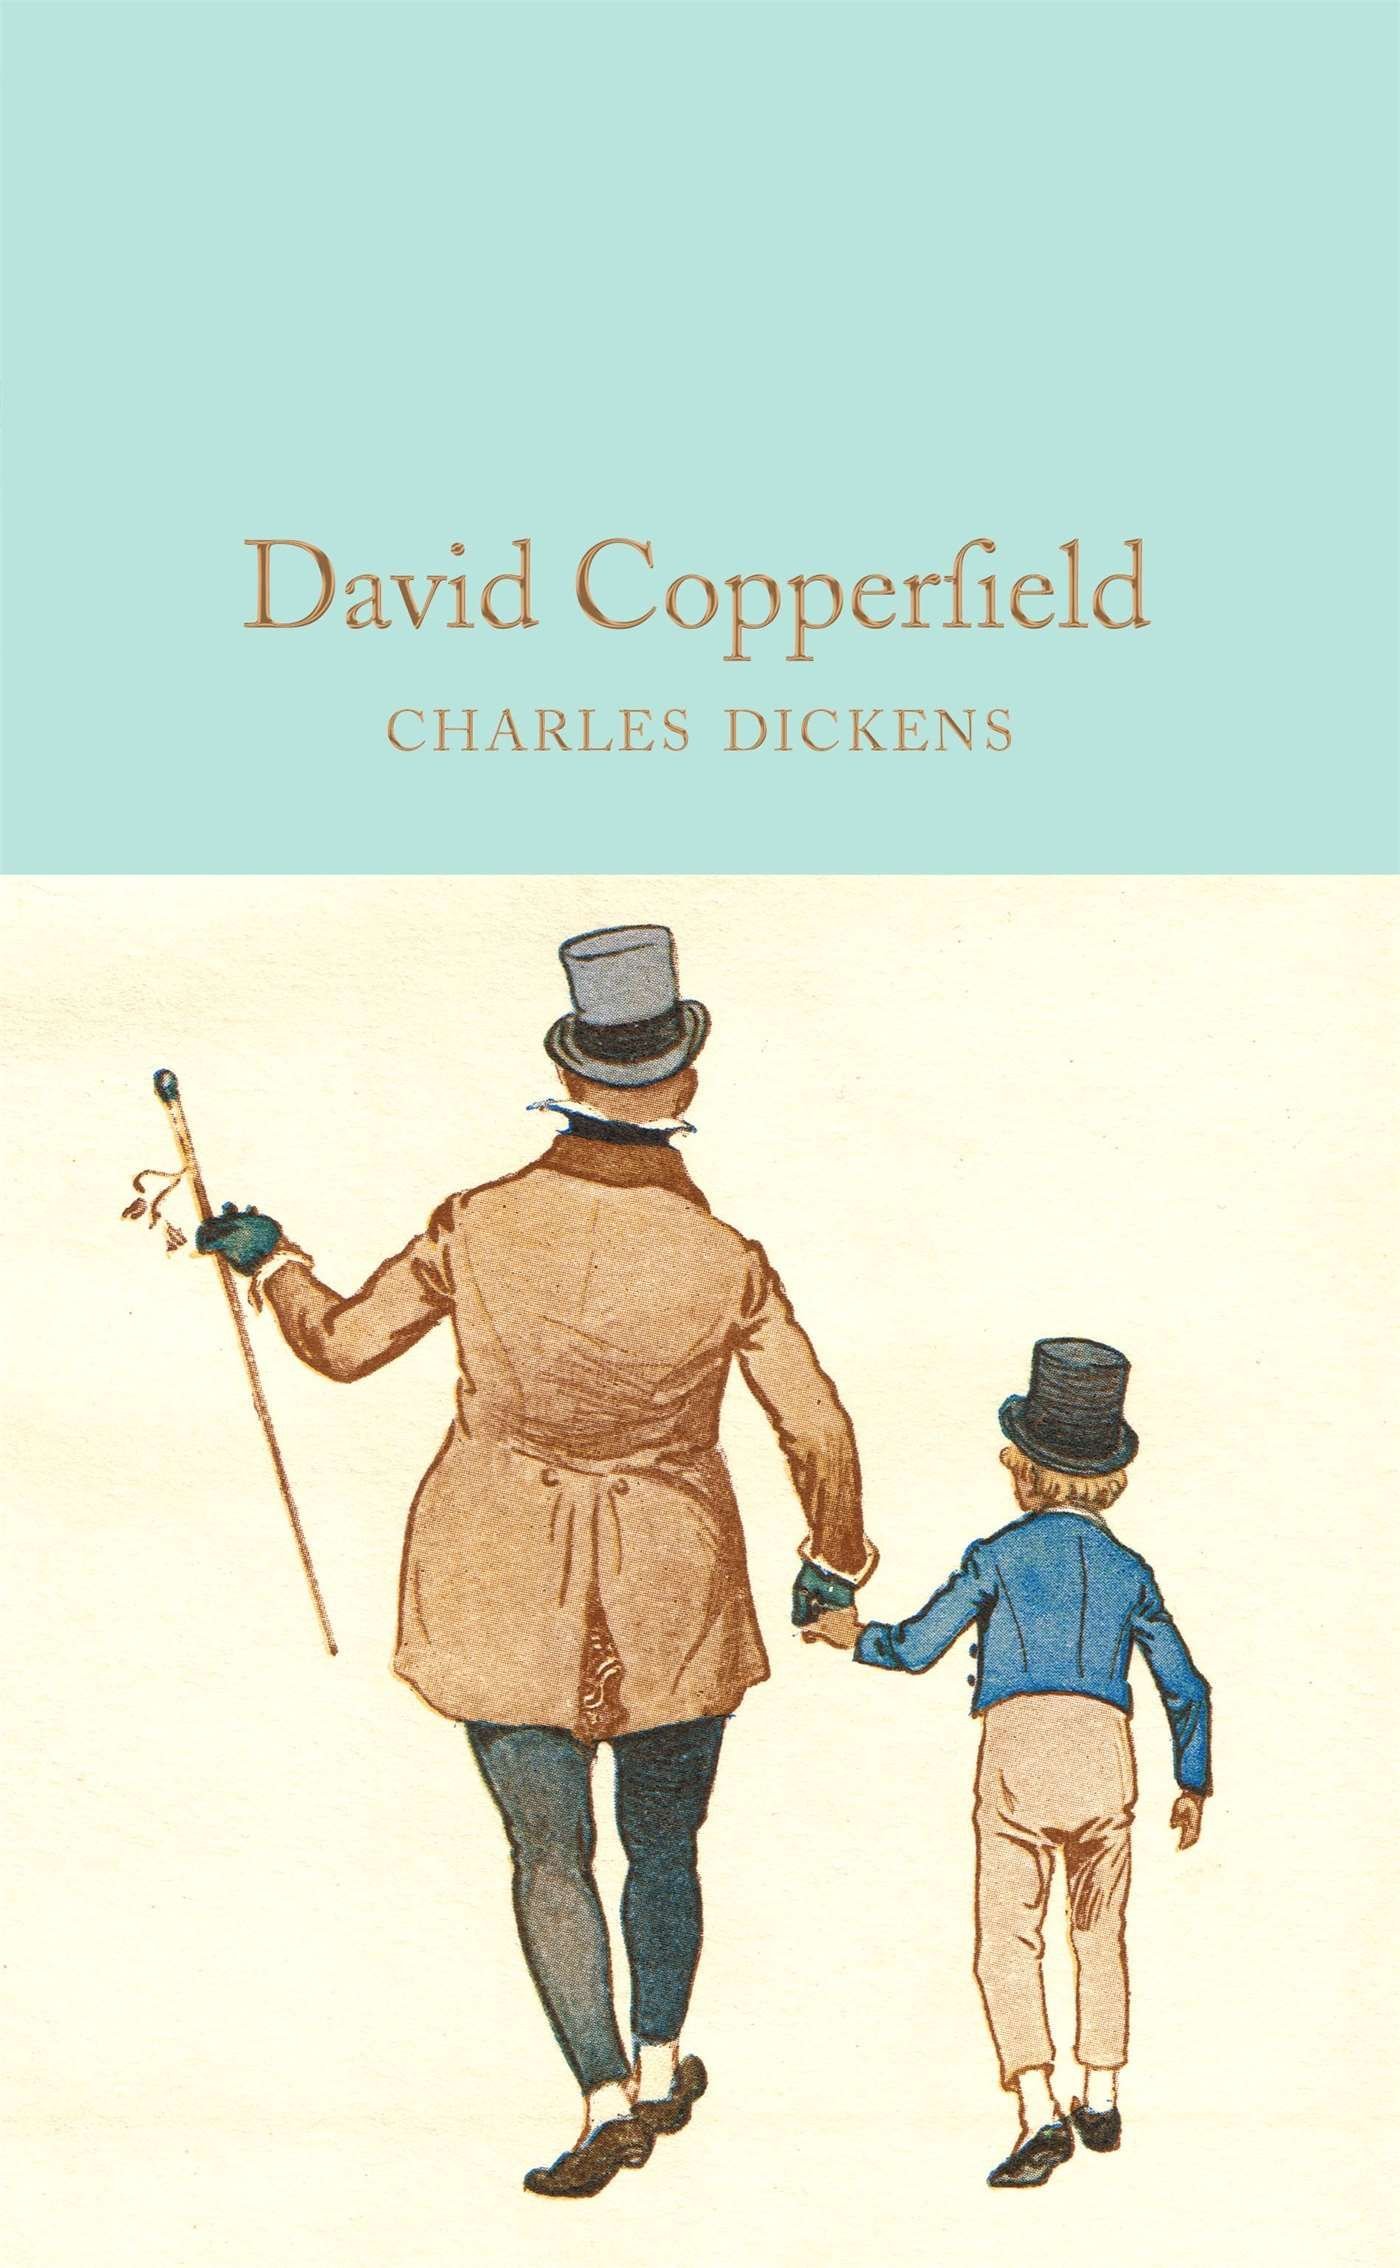 david copperfield criticism